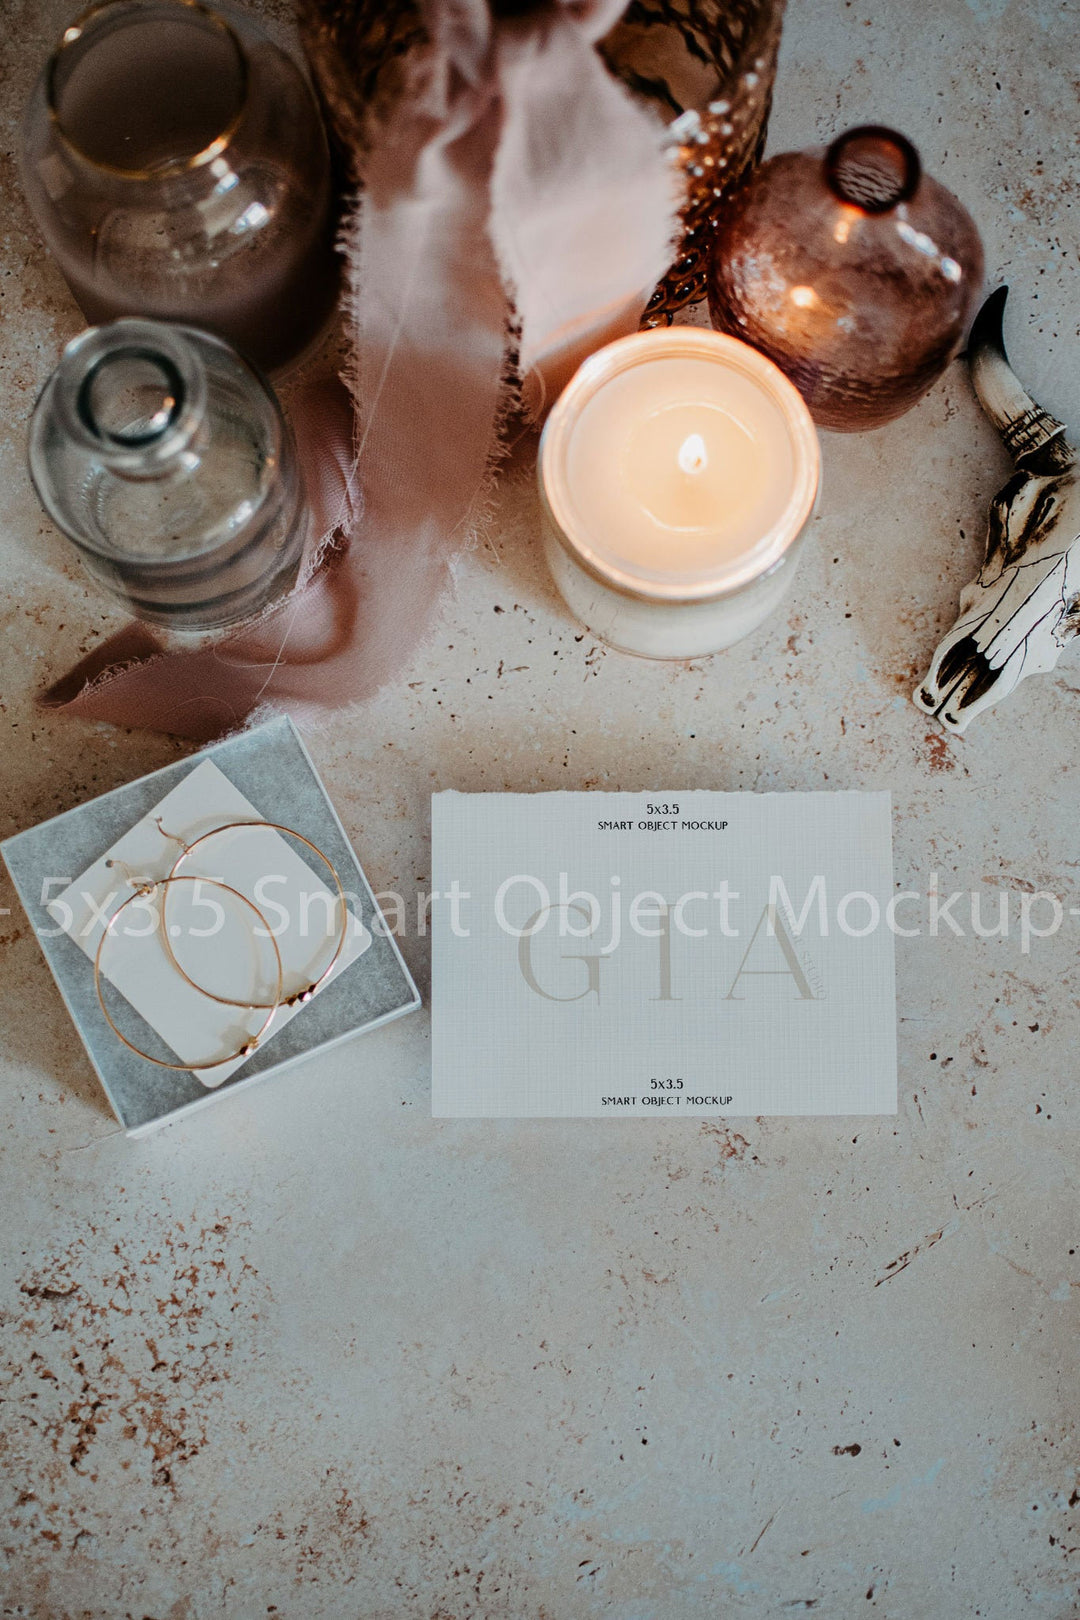 Care Card Mockup - Jewelry Care Card Mockup - Jewelry Business Card Mockup - Business Branding Mockup - Boho 5x3.5 Mockup - PSD Smart Object